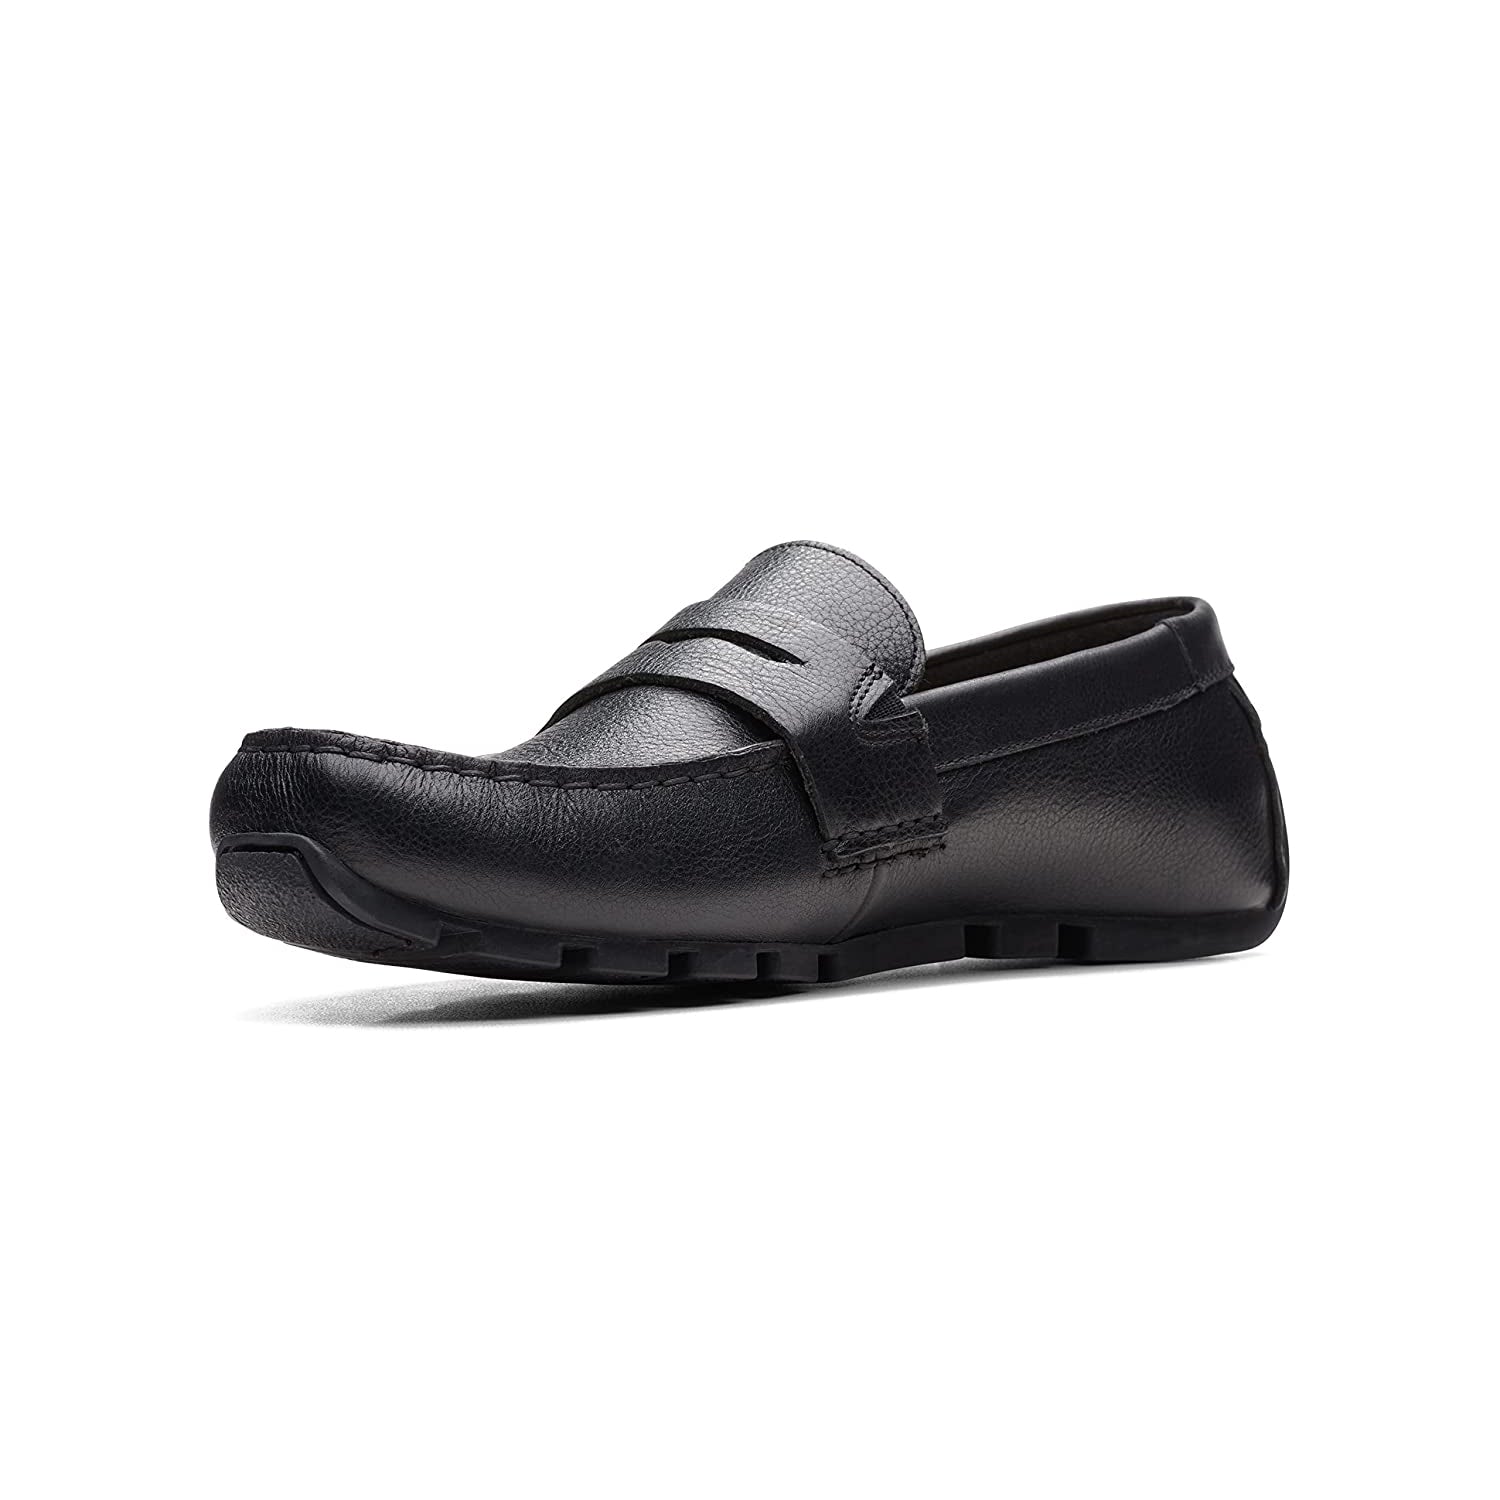 Clarks Men's Oswick Bar Casual Shoes, Black Leather - Best Price online Prokicksports.com